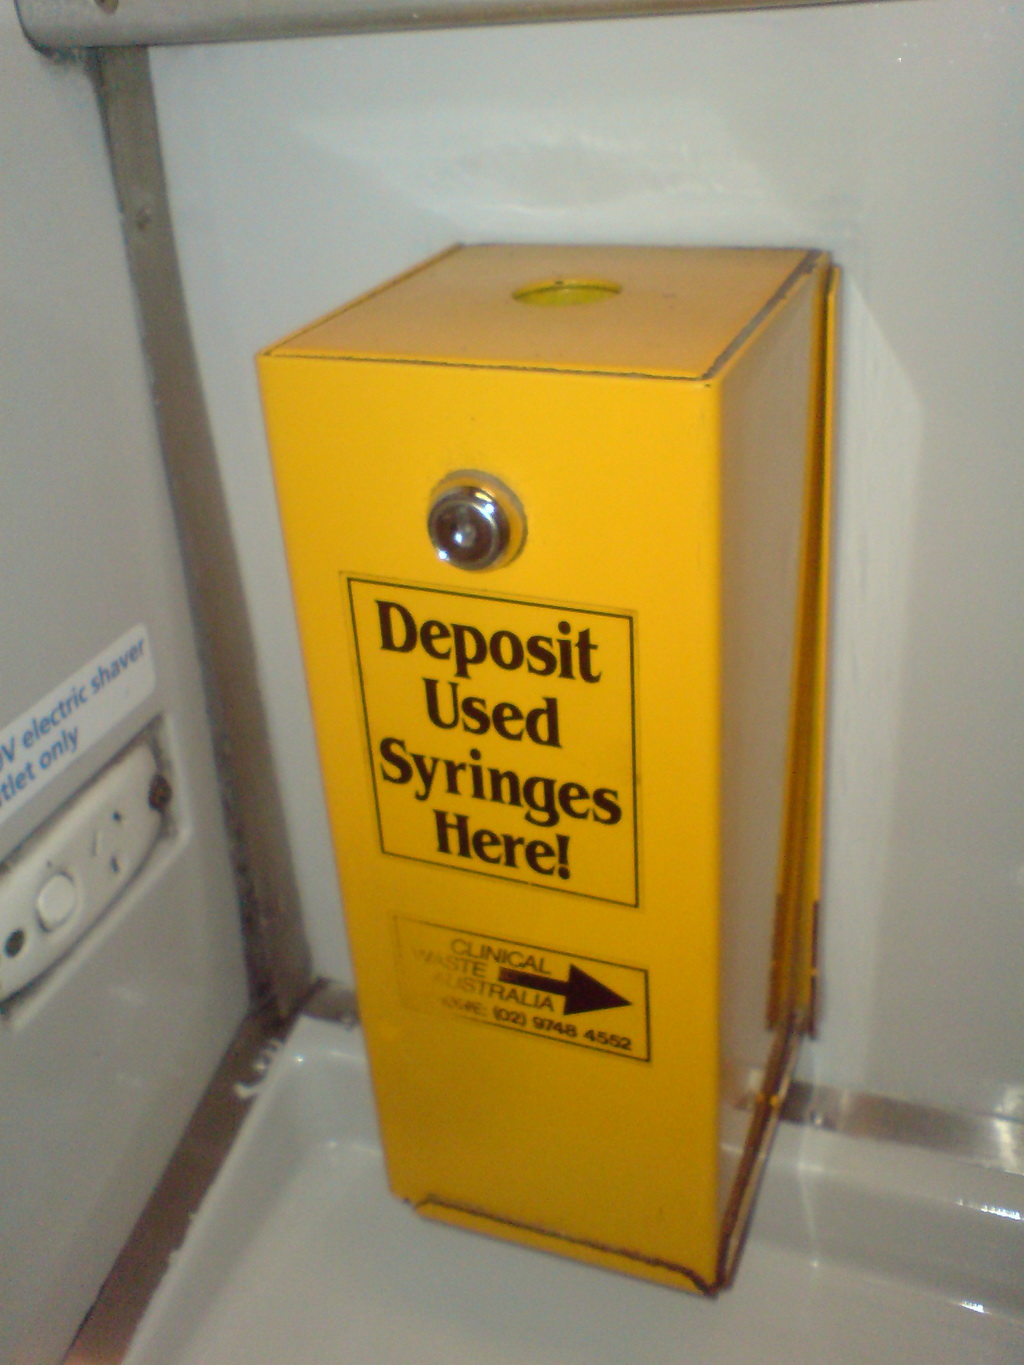 "Deposit used syringes here!"